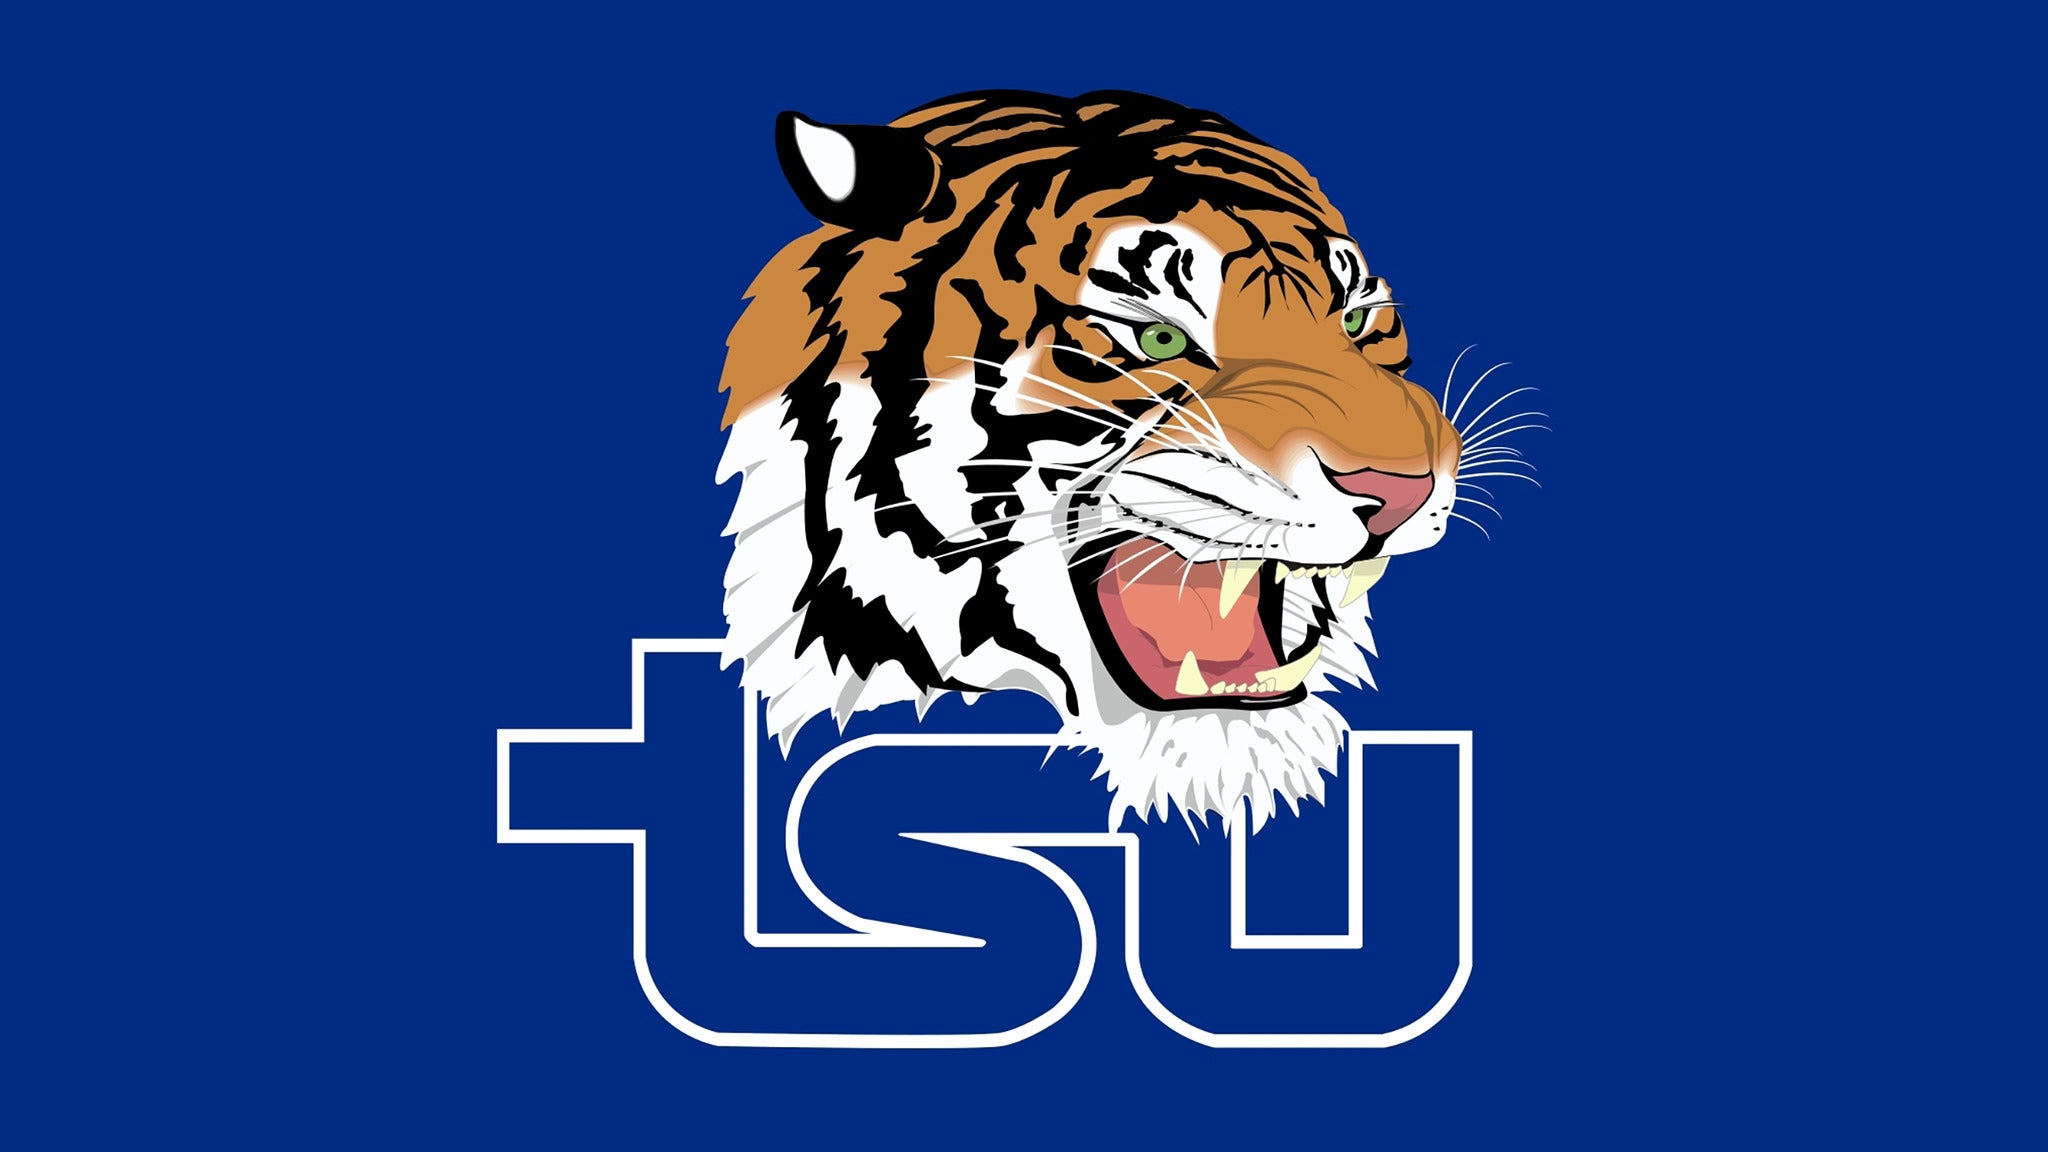 Tennessee State Tigers Mens Basketball presale information on freepresalepasswords.com